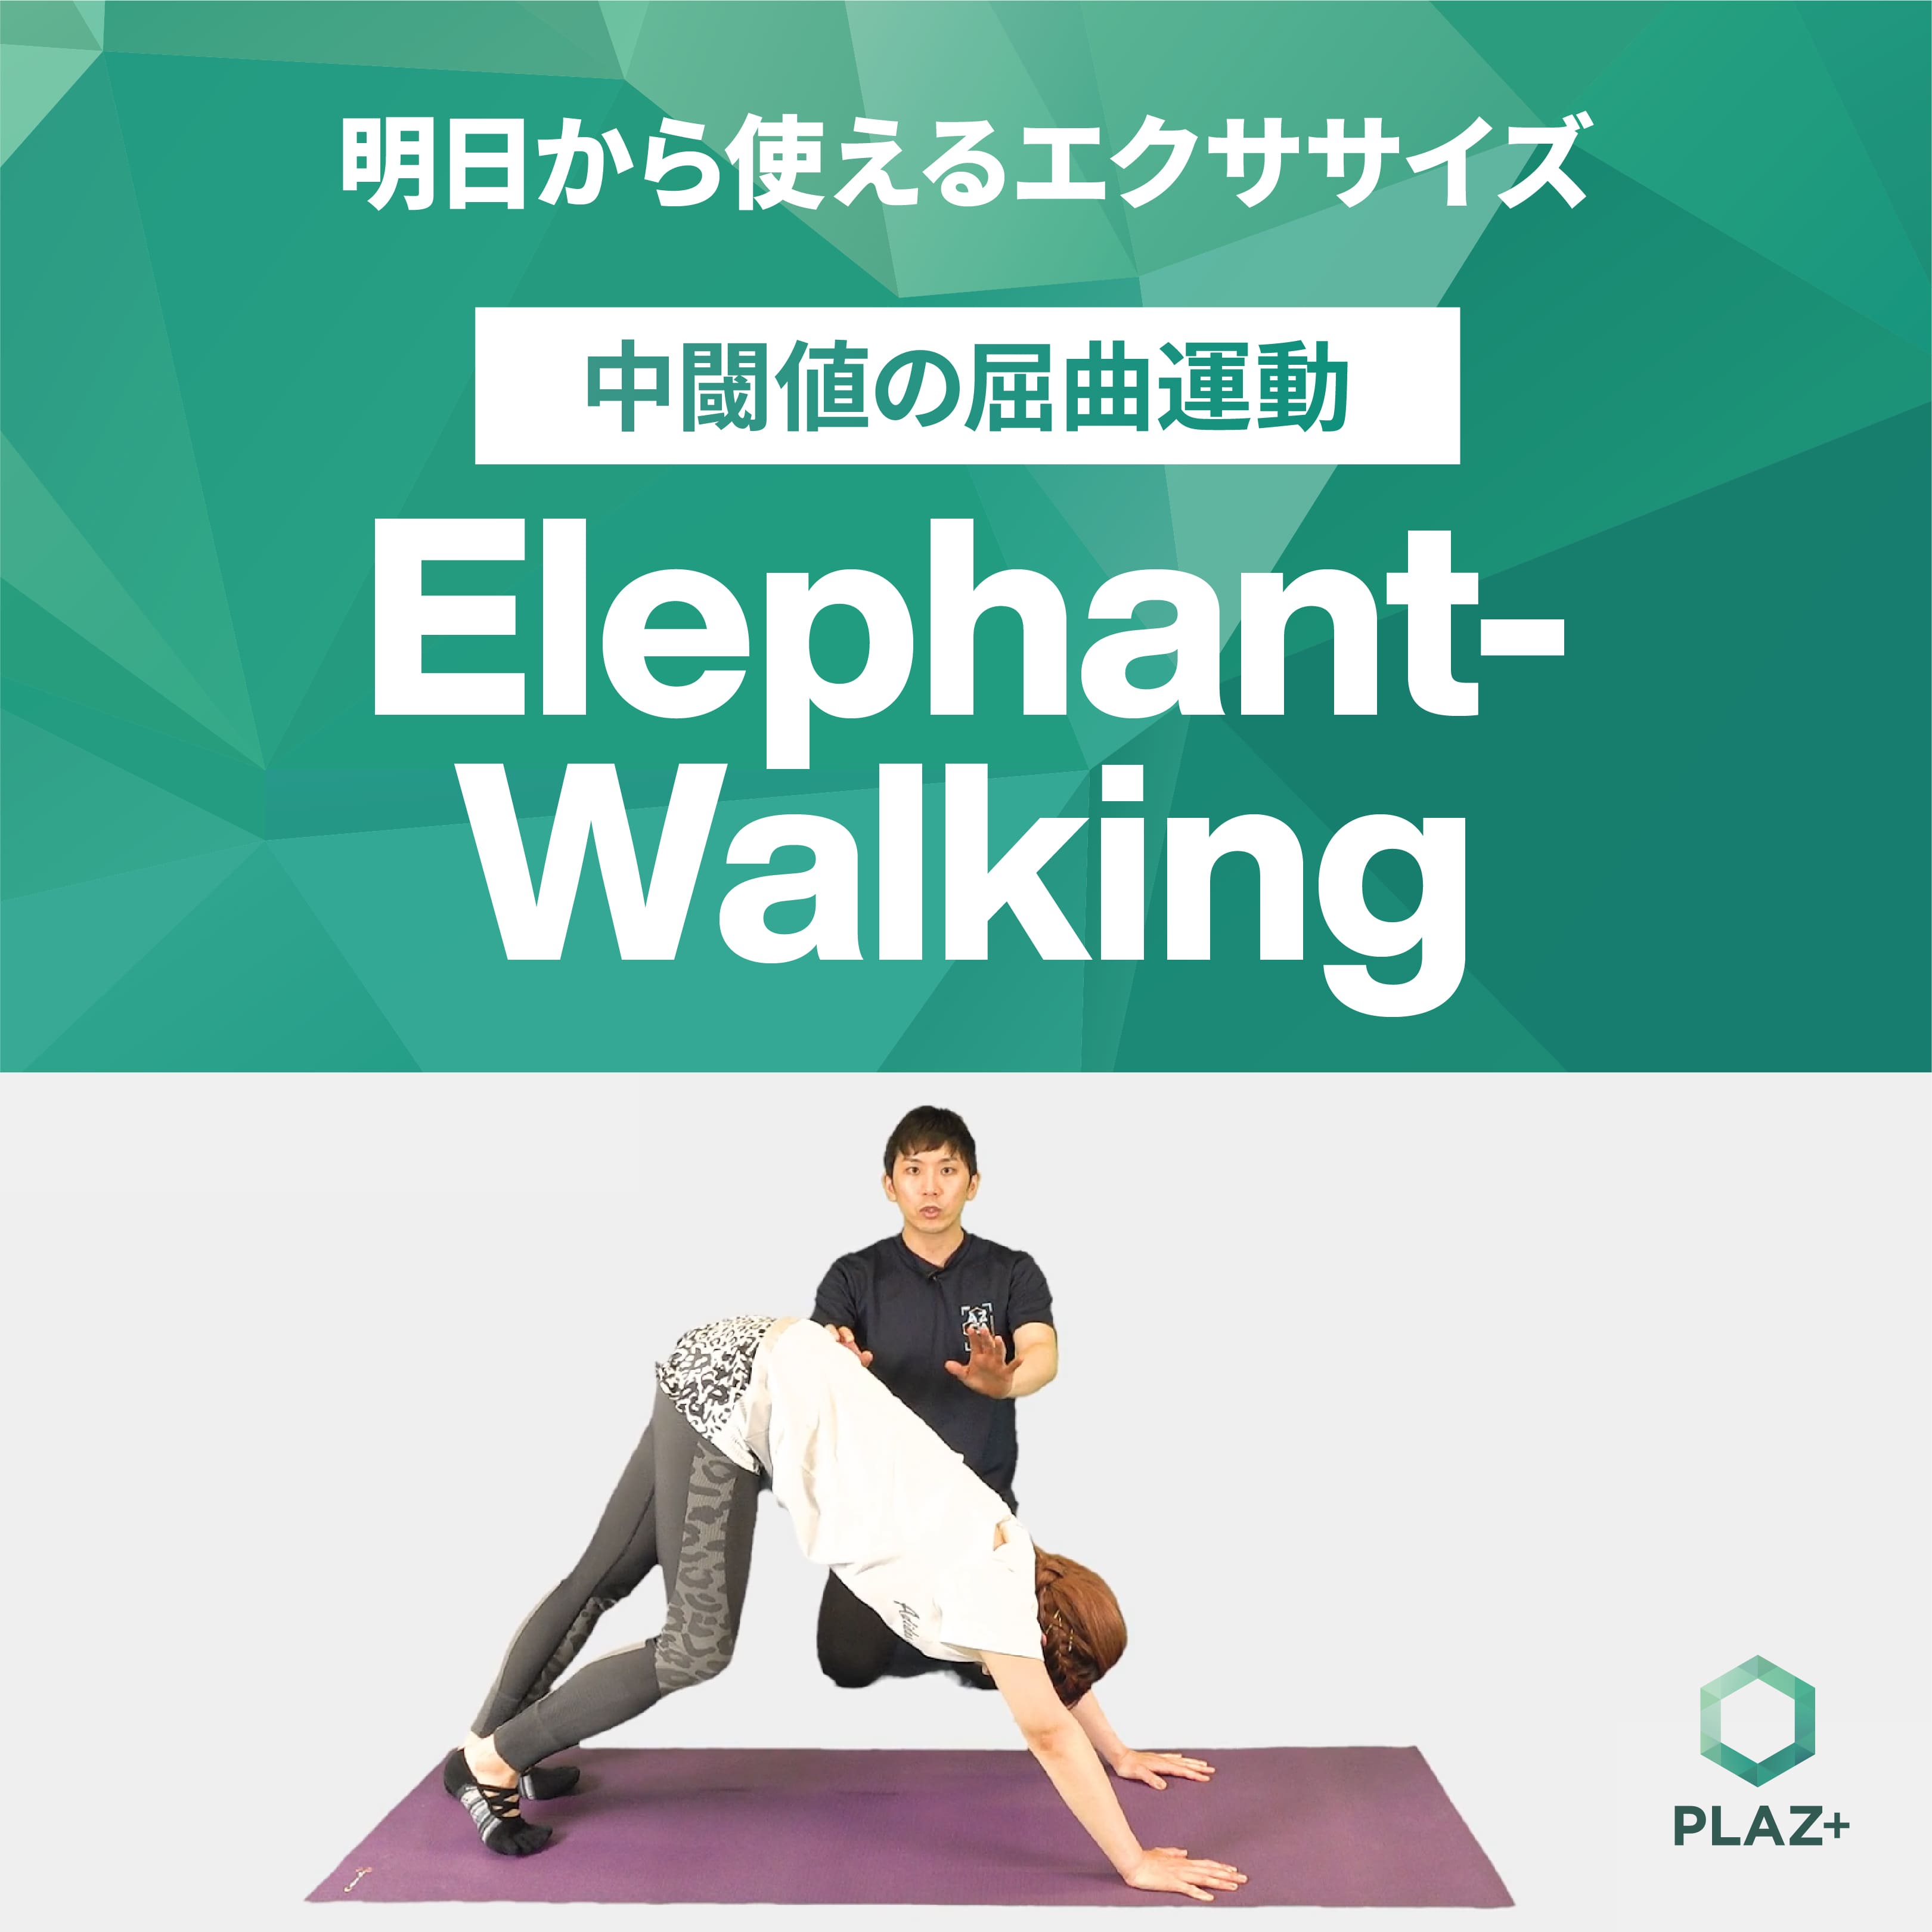 Elephant-Walking